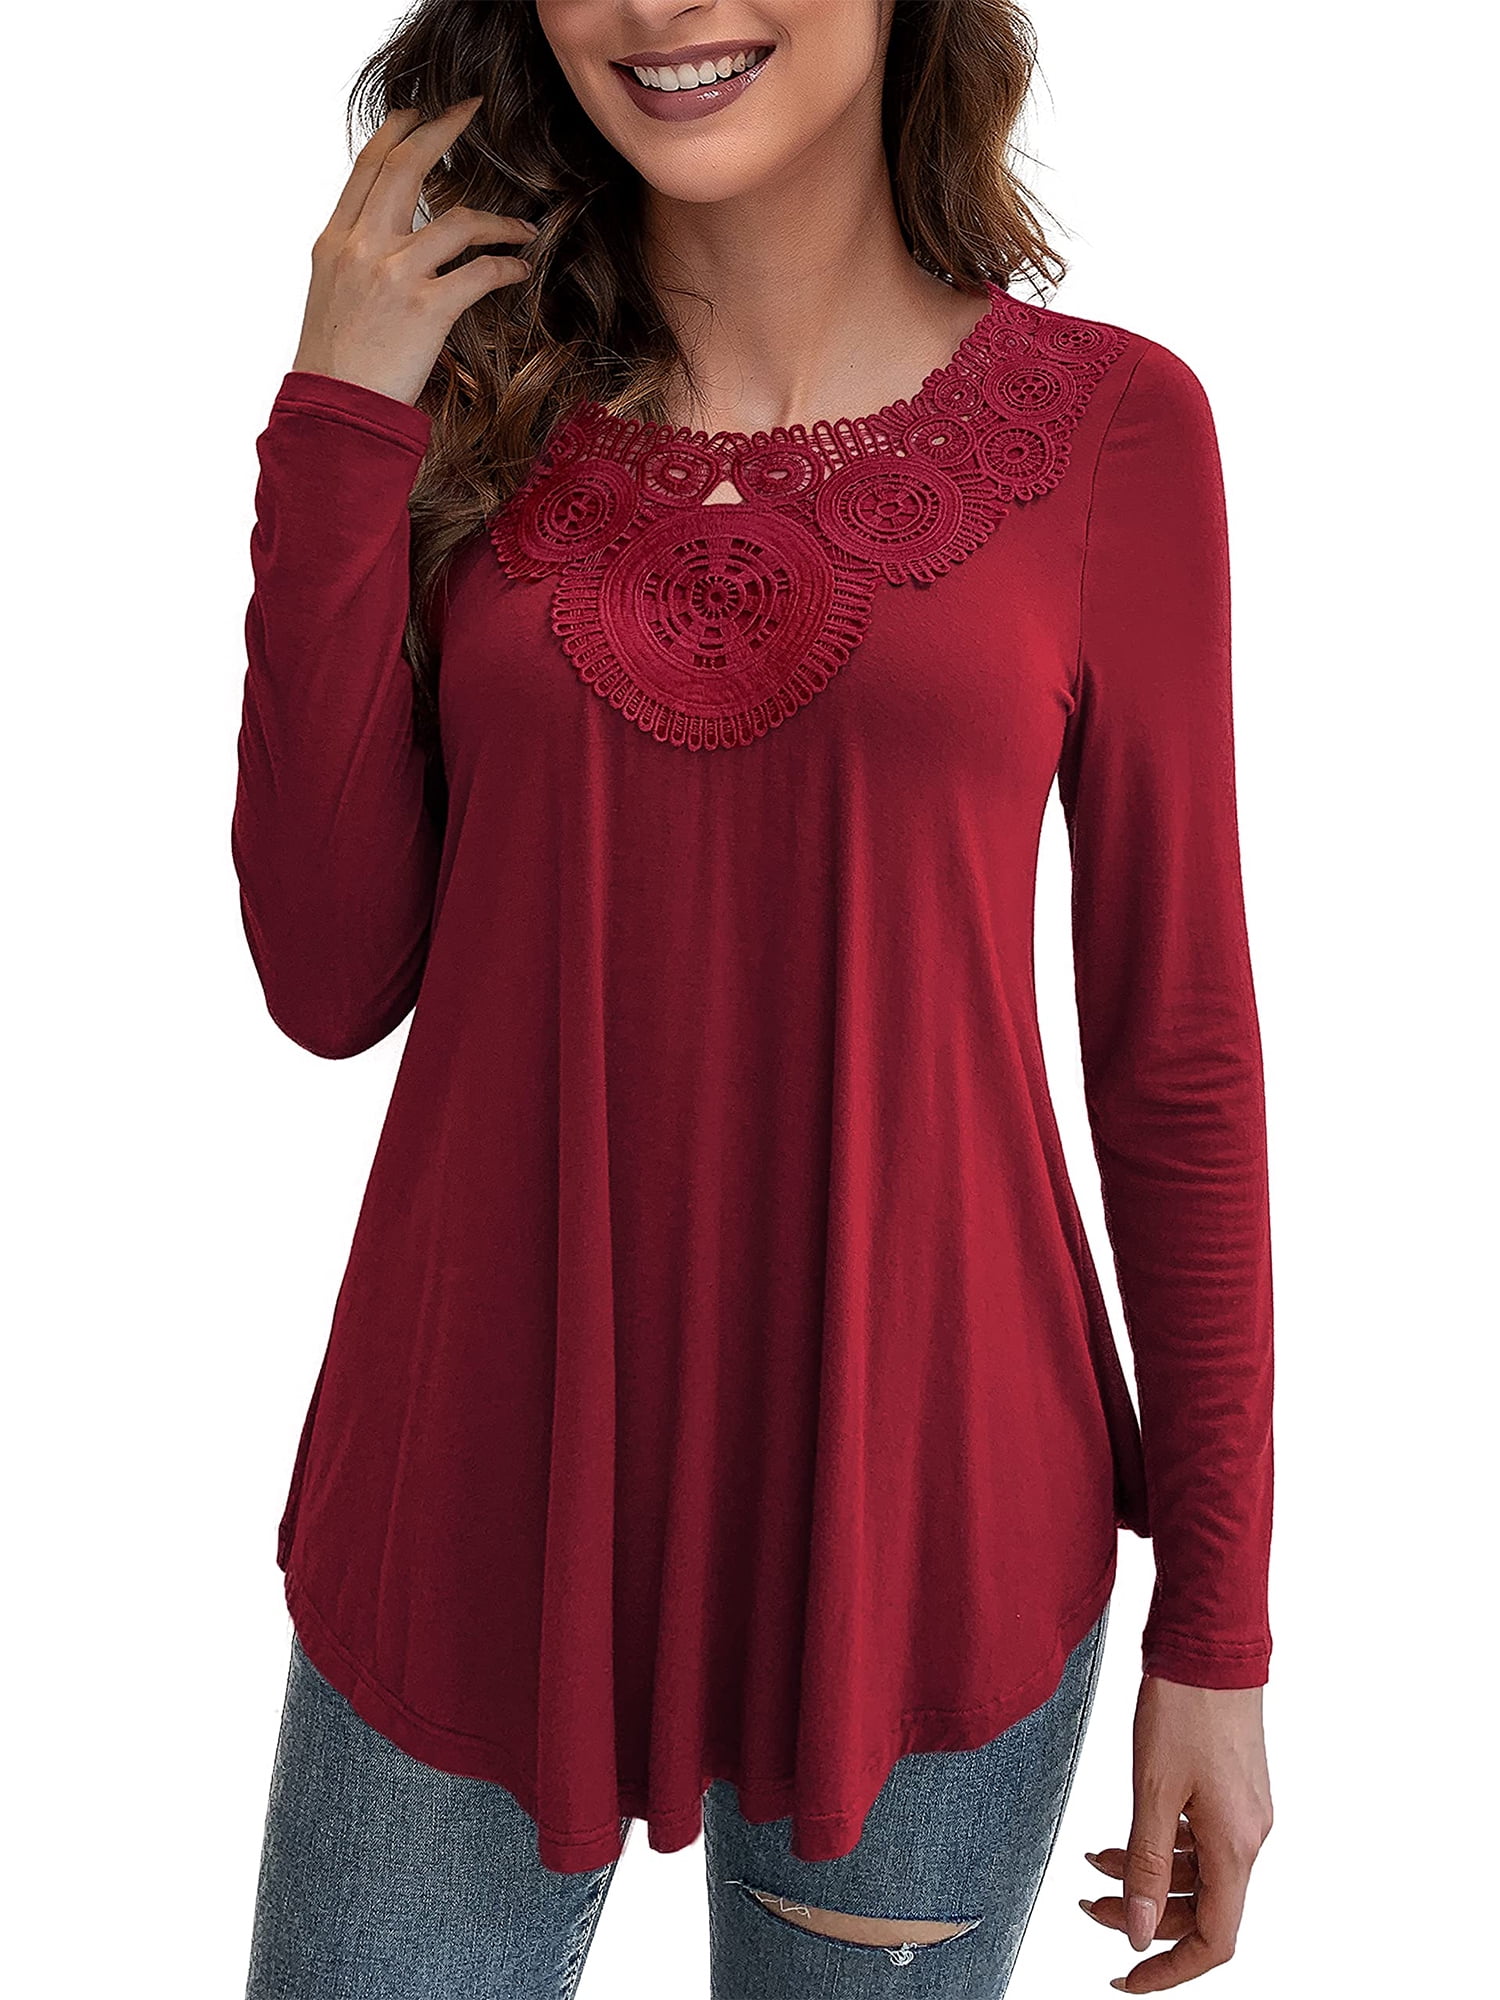 Women's Plus Size Long Sleeve Shirts Floral Crochet Tunic Top Lace ...